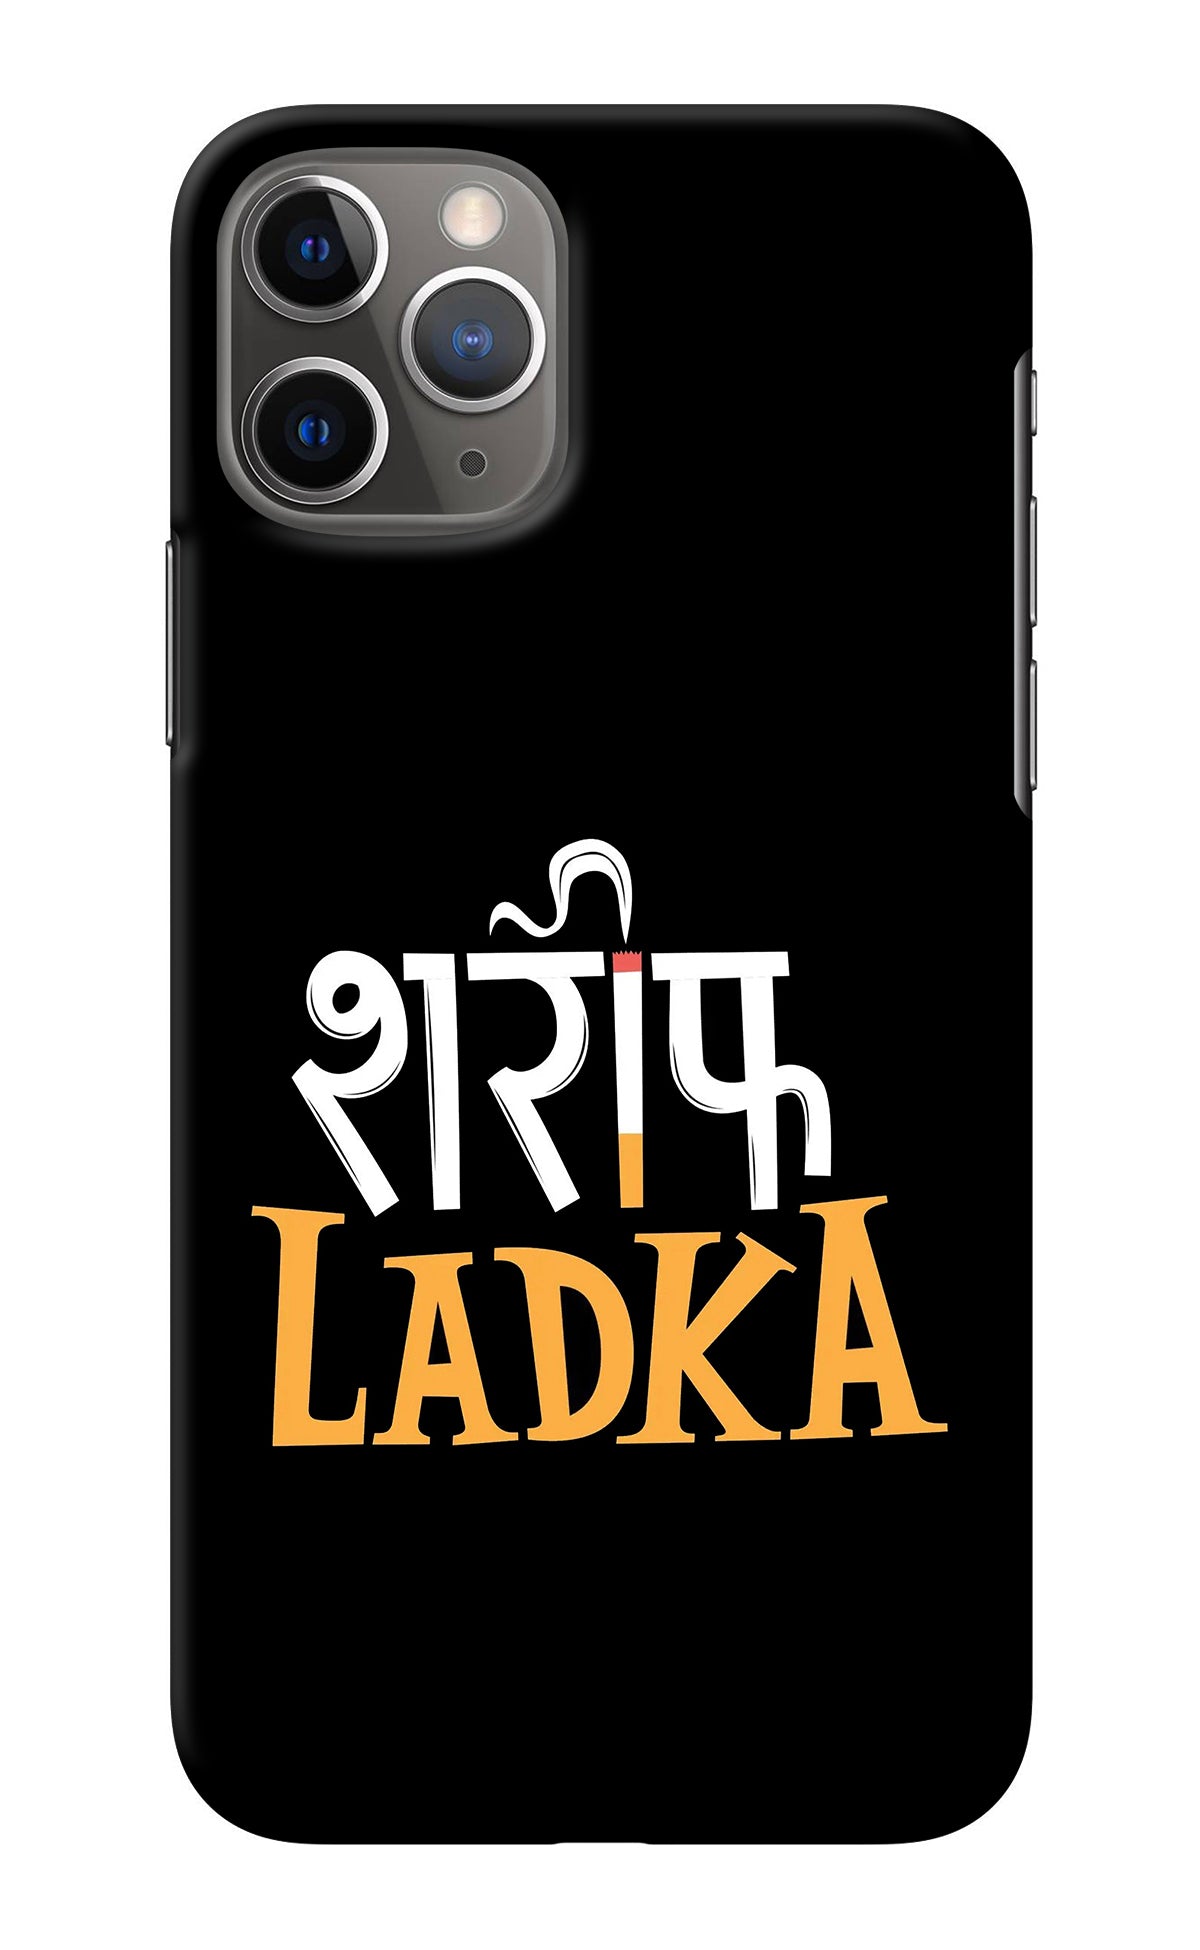 Shareef Ladka iPhone 11 Pro Back Cover